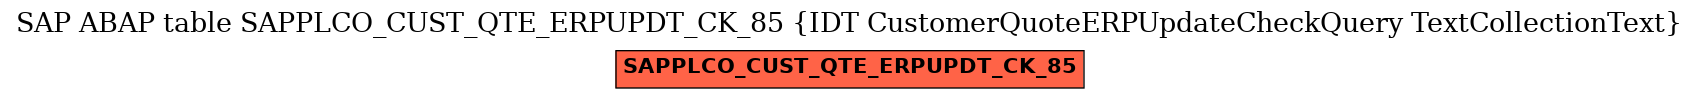 E-R Diagram for table SAPPLCO_CUST_QTE_ERPUPDT_CK_85 (IDT CustomerQuoteERPUpdateCheckQuery TextCollectionText)